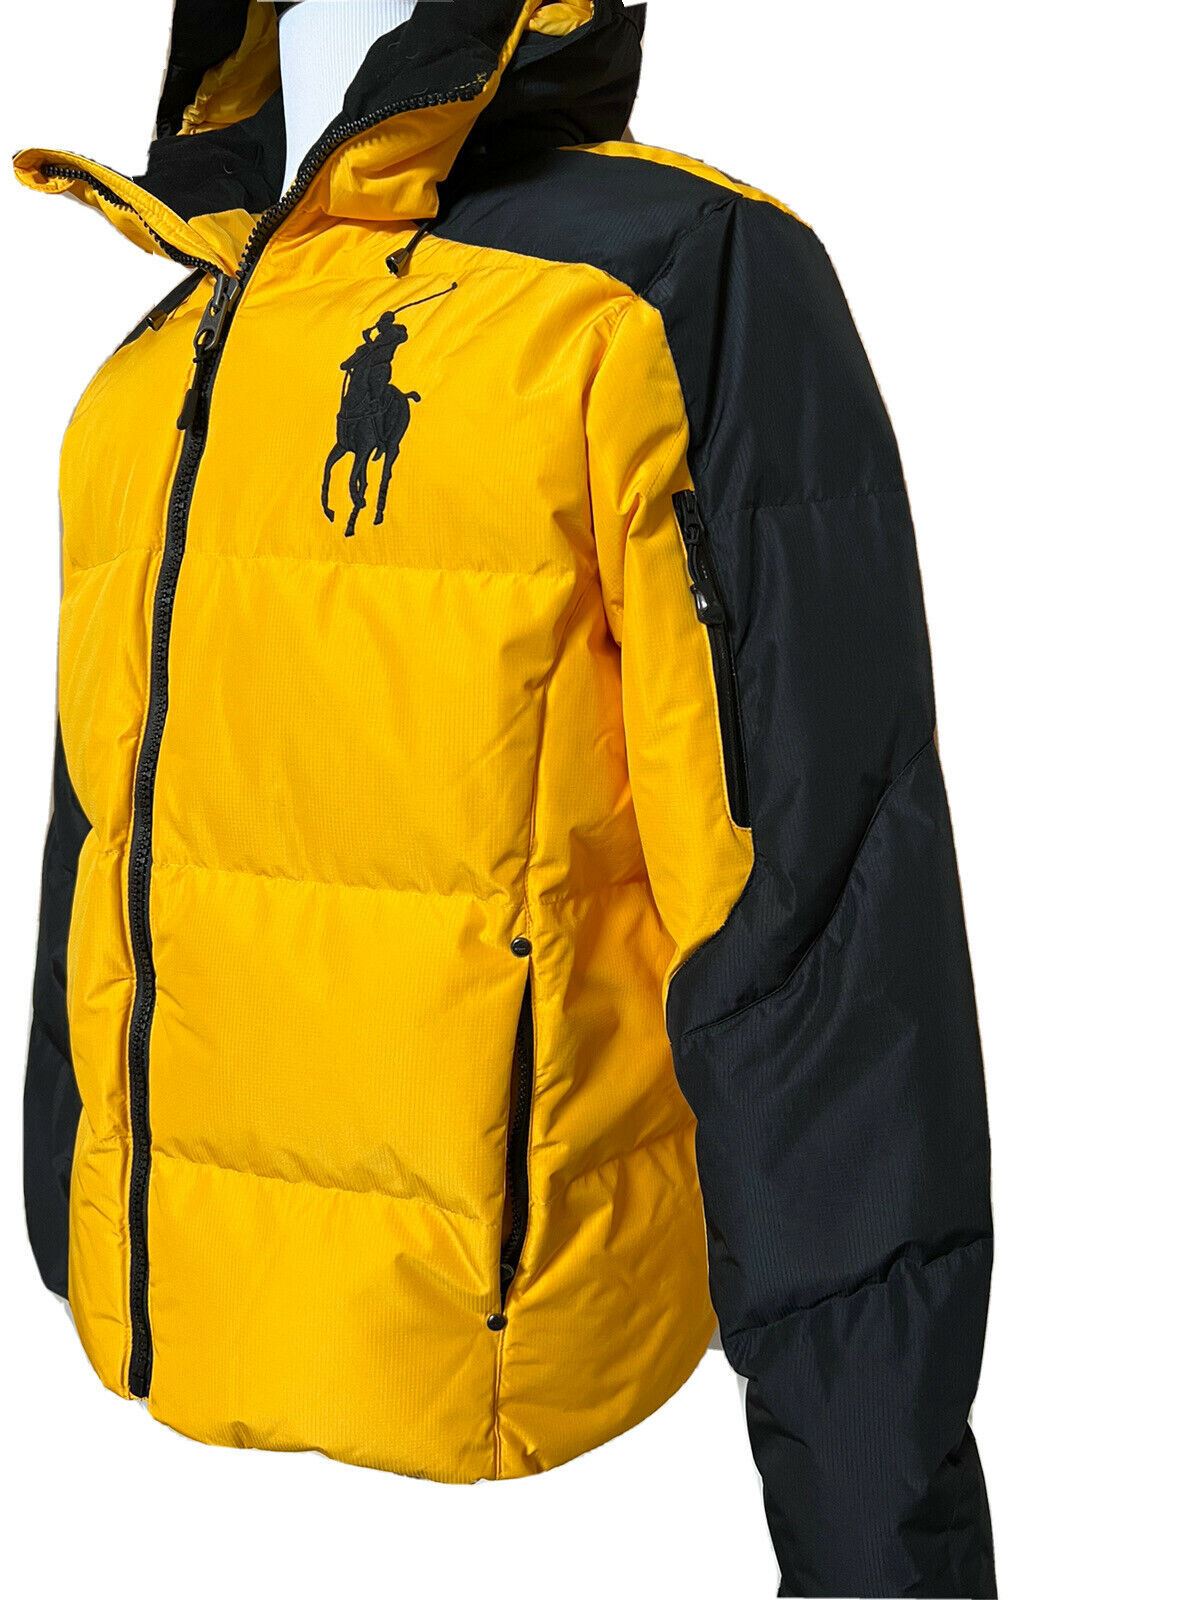 NWT $348 Polo Ralph Lauren Men's Yellow/Black Hoodie Parka Jacket Medium